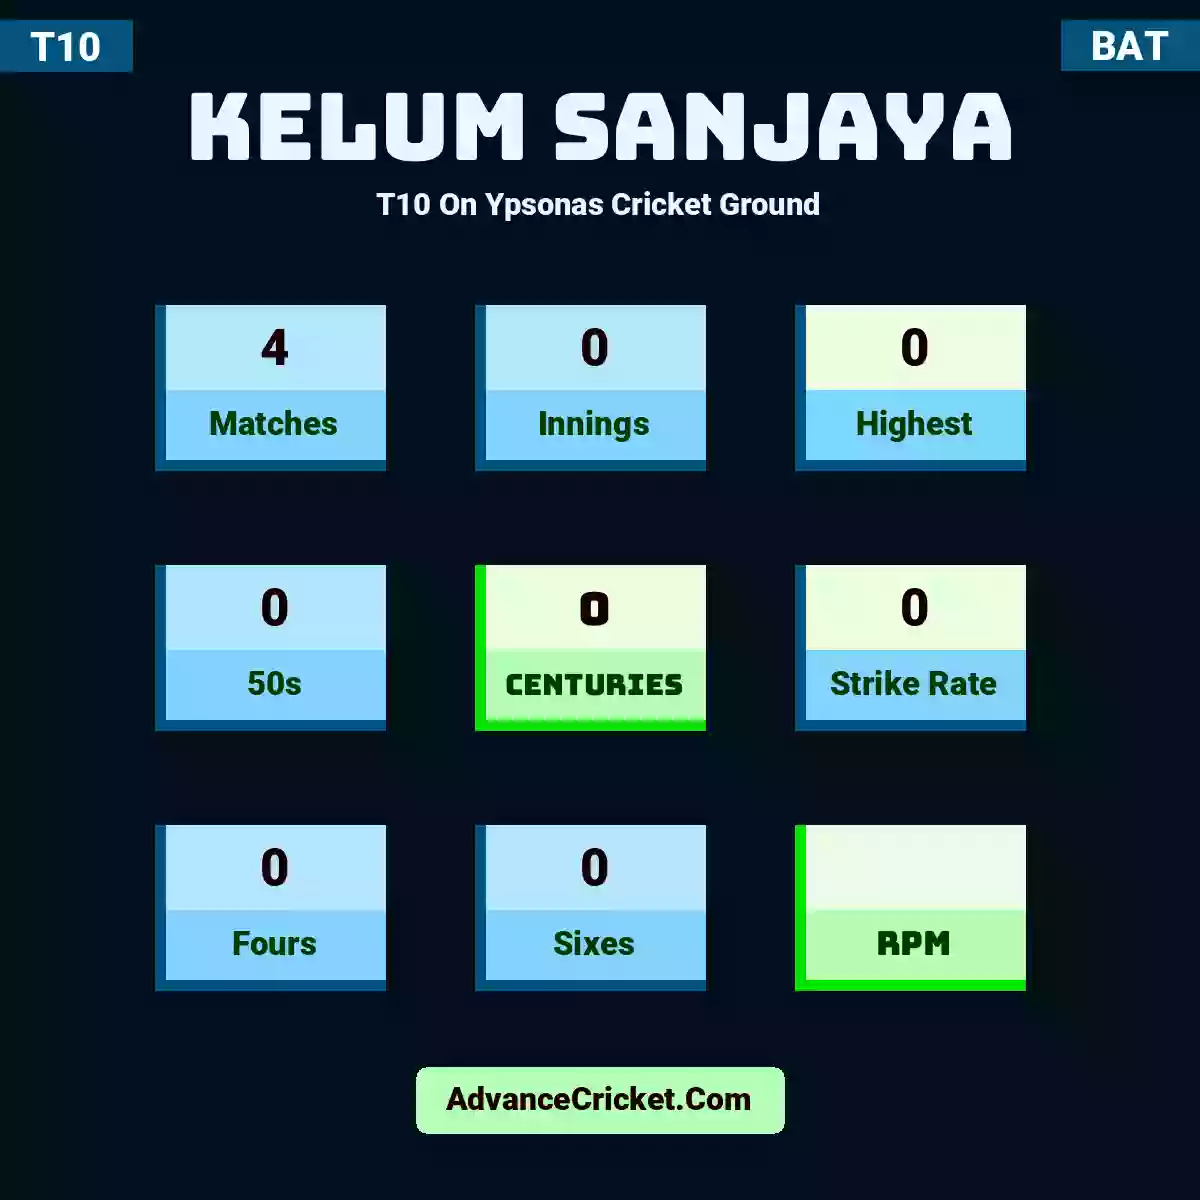 Kelum Sanjaya T10  On Ypsonas Cricket Ground, Kelum Sanjaya played 4 matches, scored 0 runs as highest, 0 half-centuries, and 0 centuries, with a strike rate of 0. K.Sanjaya hit 0 fours and 0 sixes.